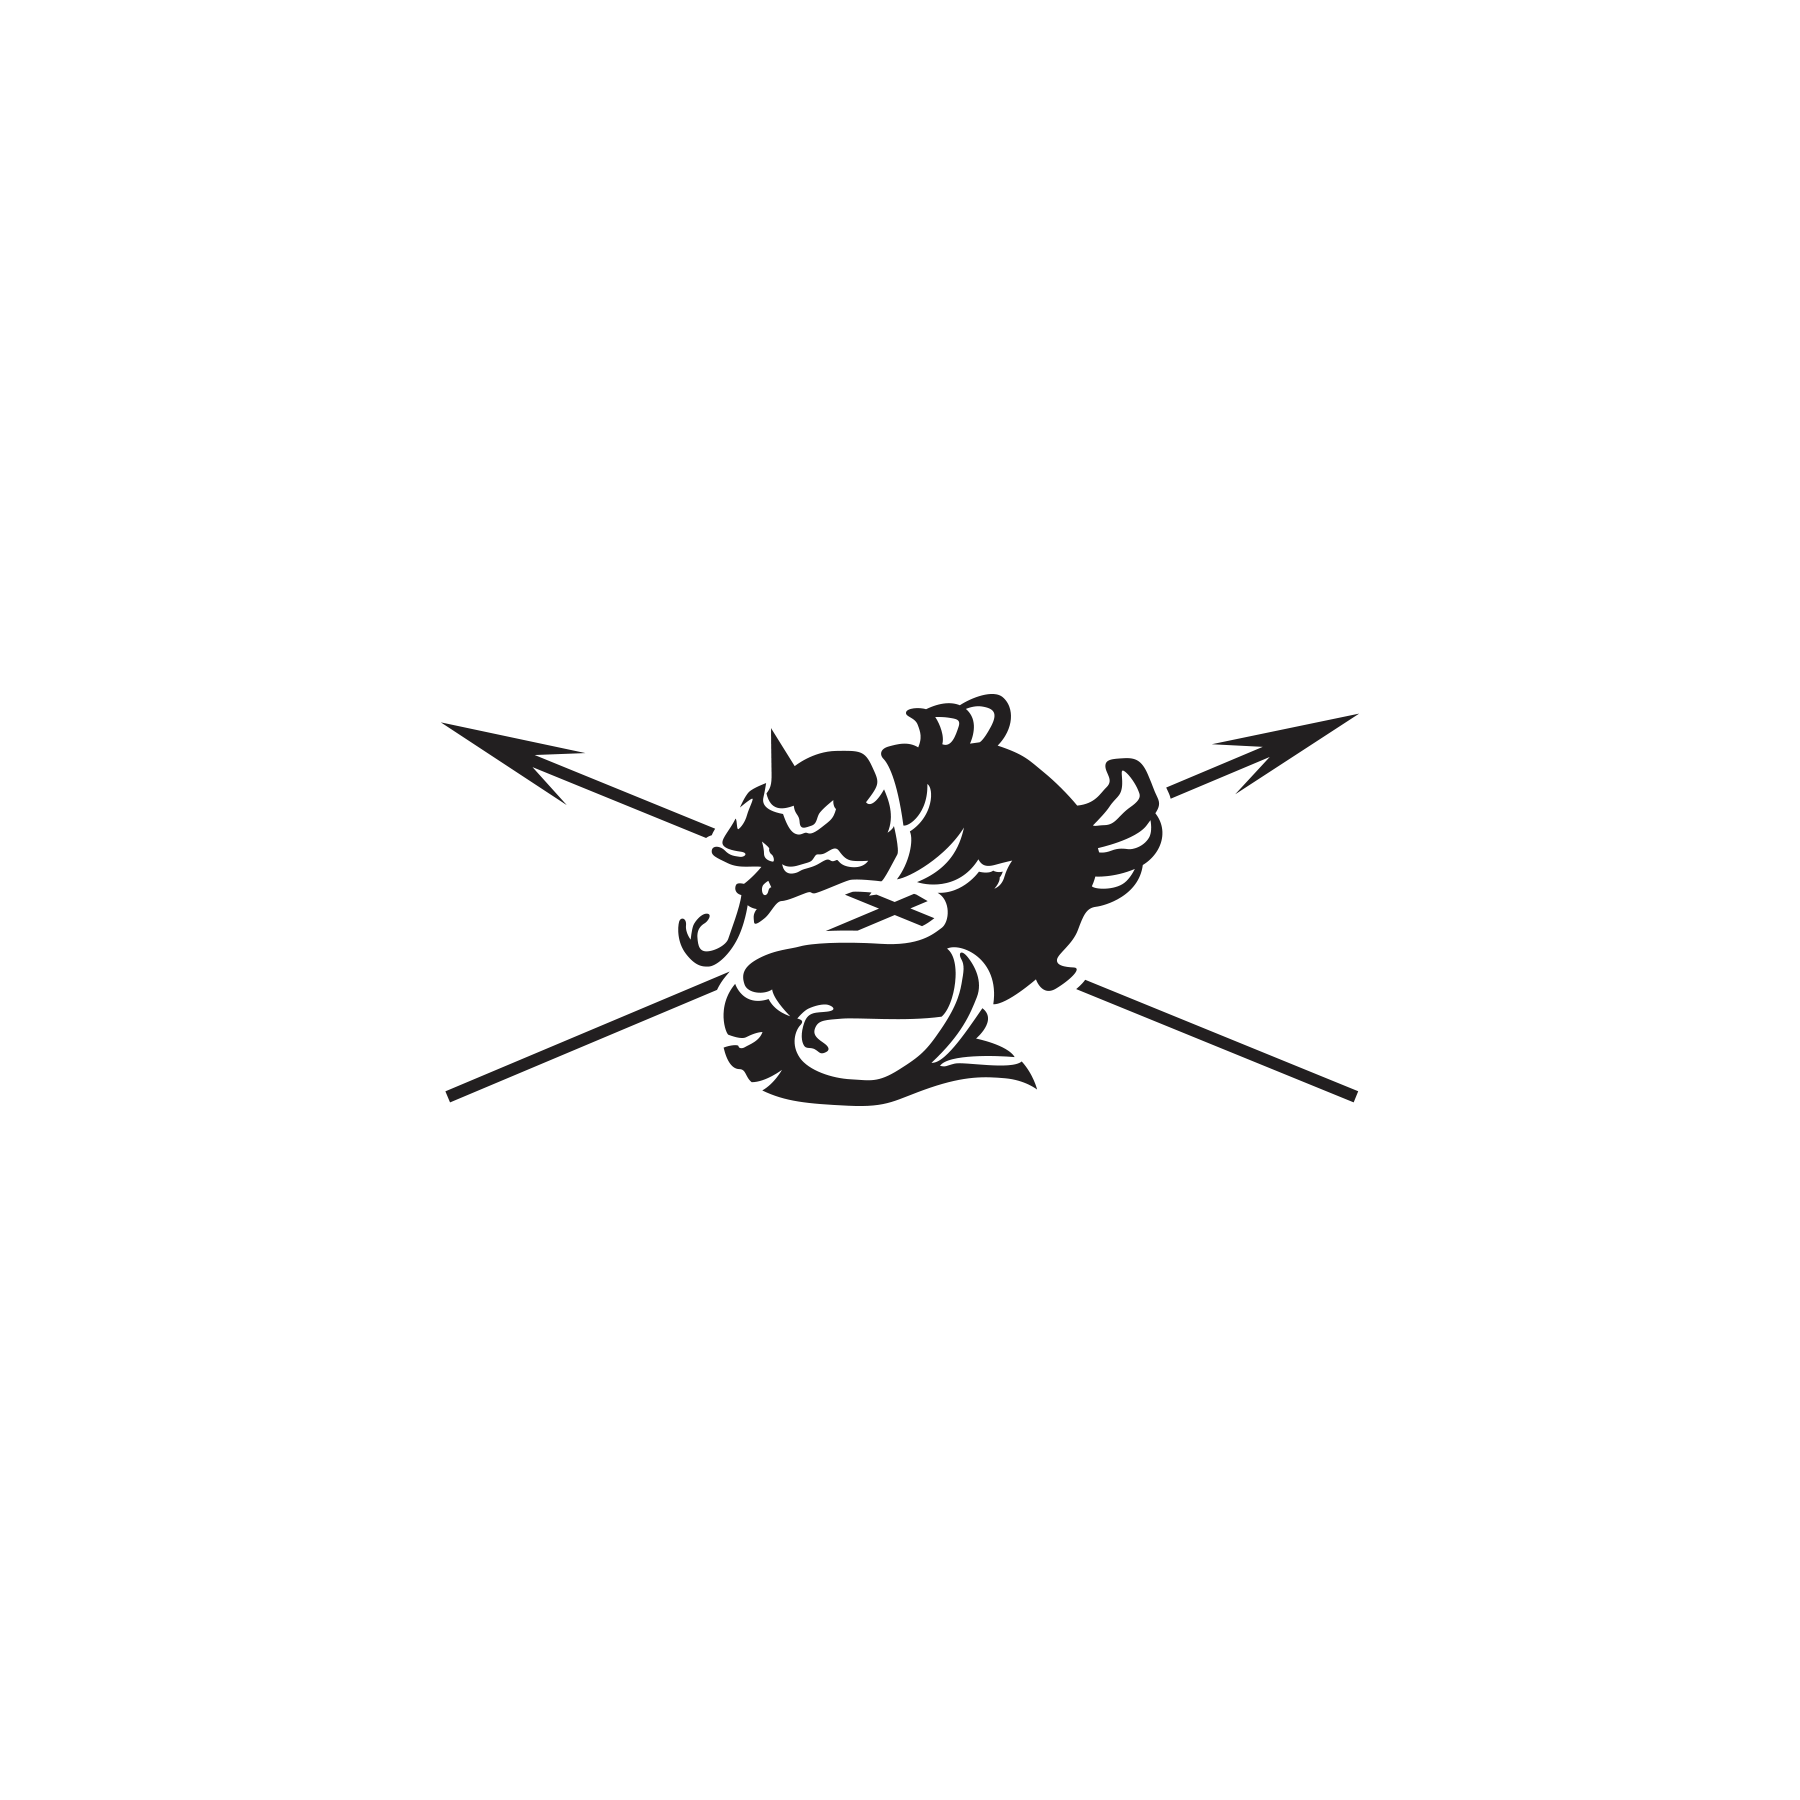 Beast Logo PNG Transparent & SVG Vector - Freebie Supply